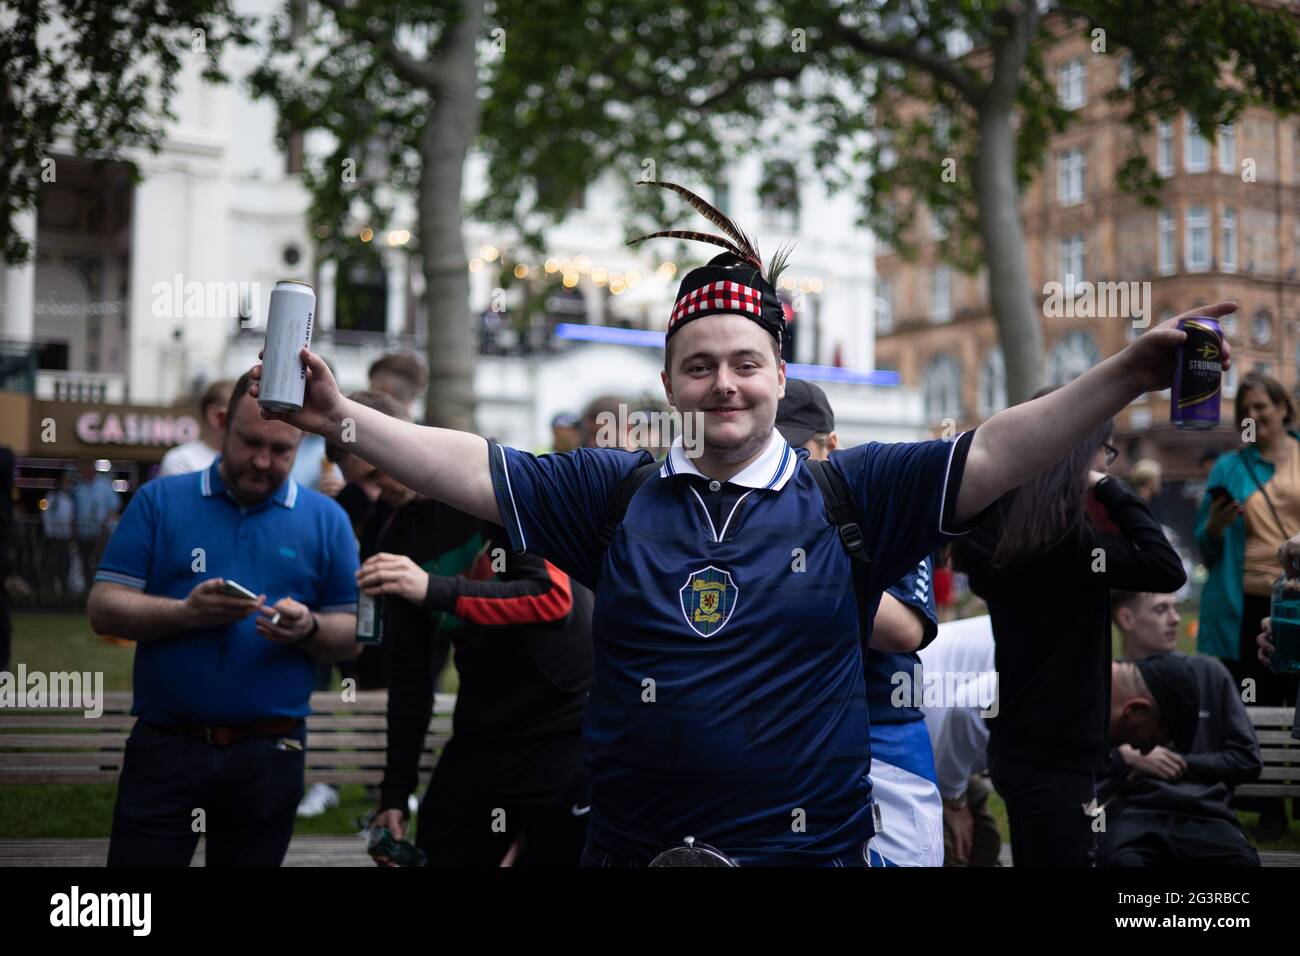 London, UK. 17th June, 2021. Football fan supporting Scotland. Credit: Yuen Ching Ng/Alamy Live News Stock Photo